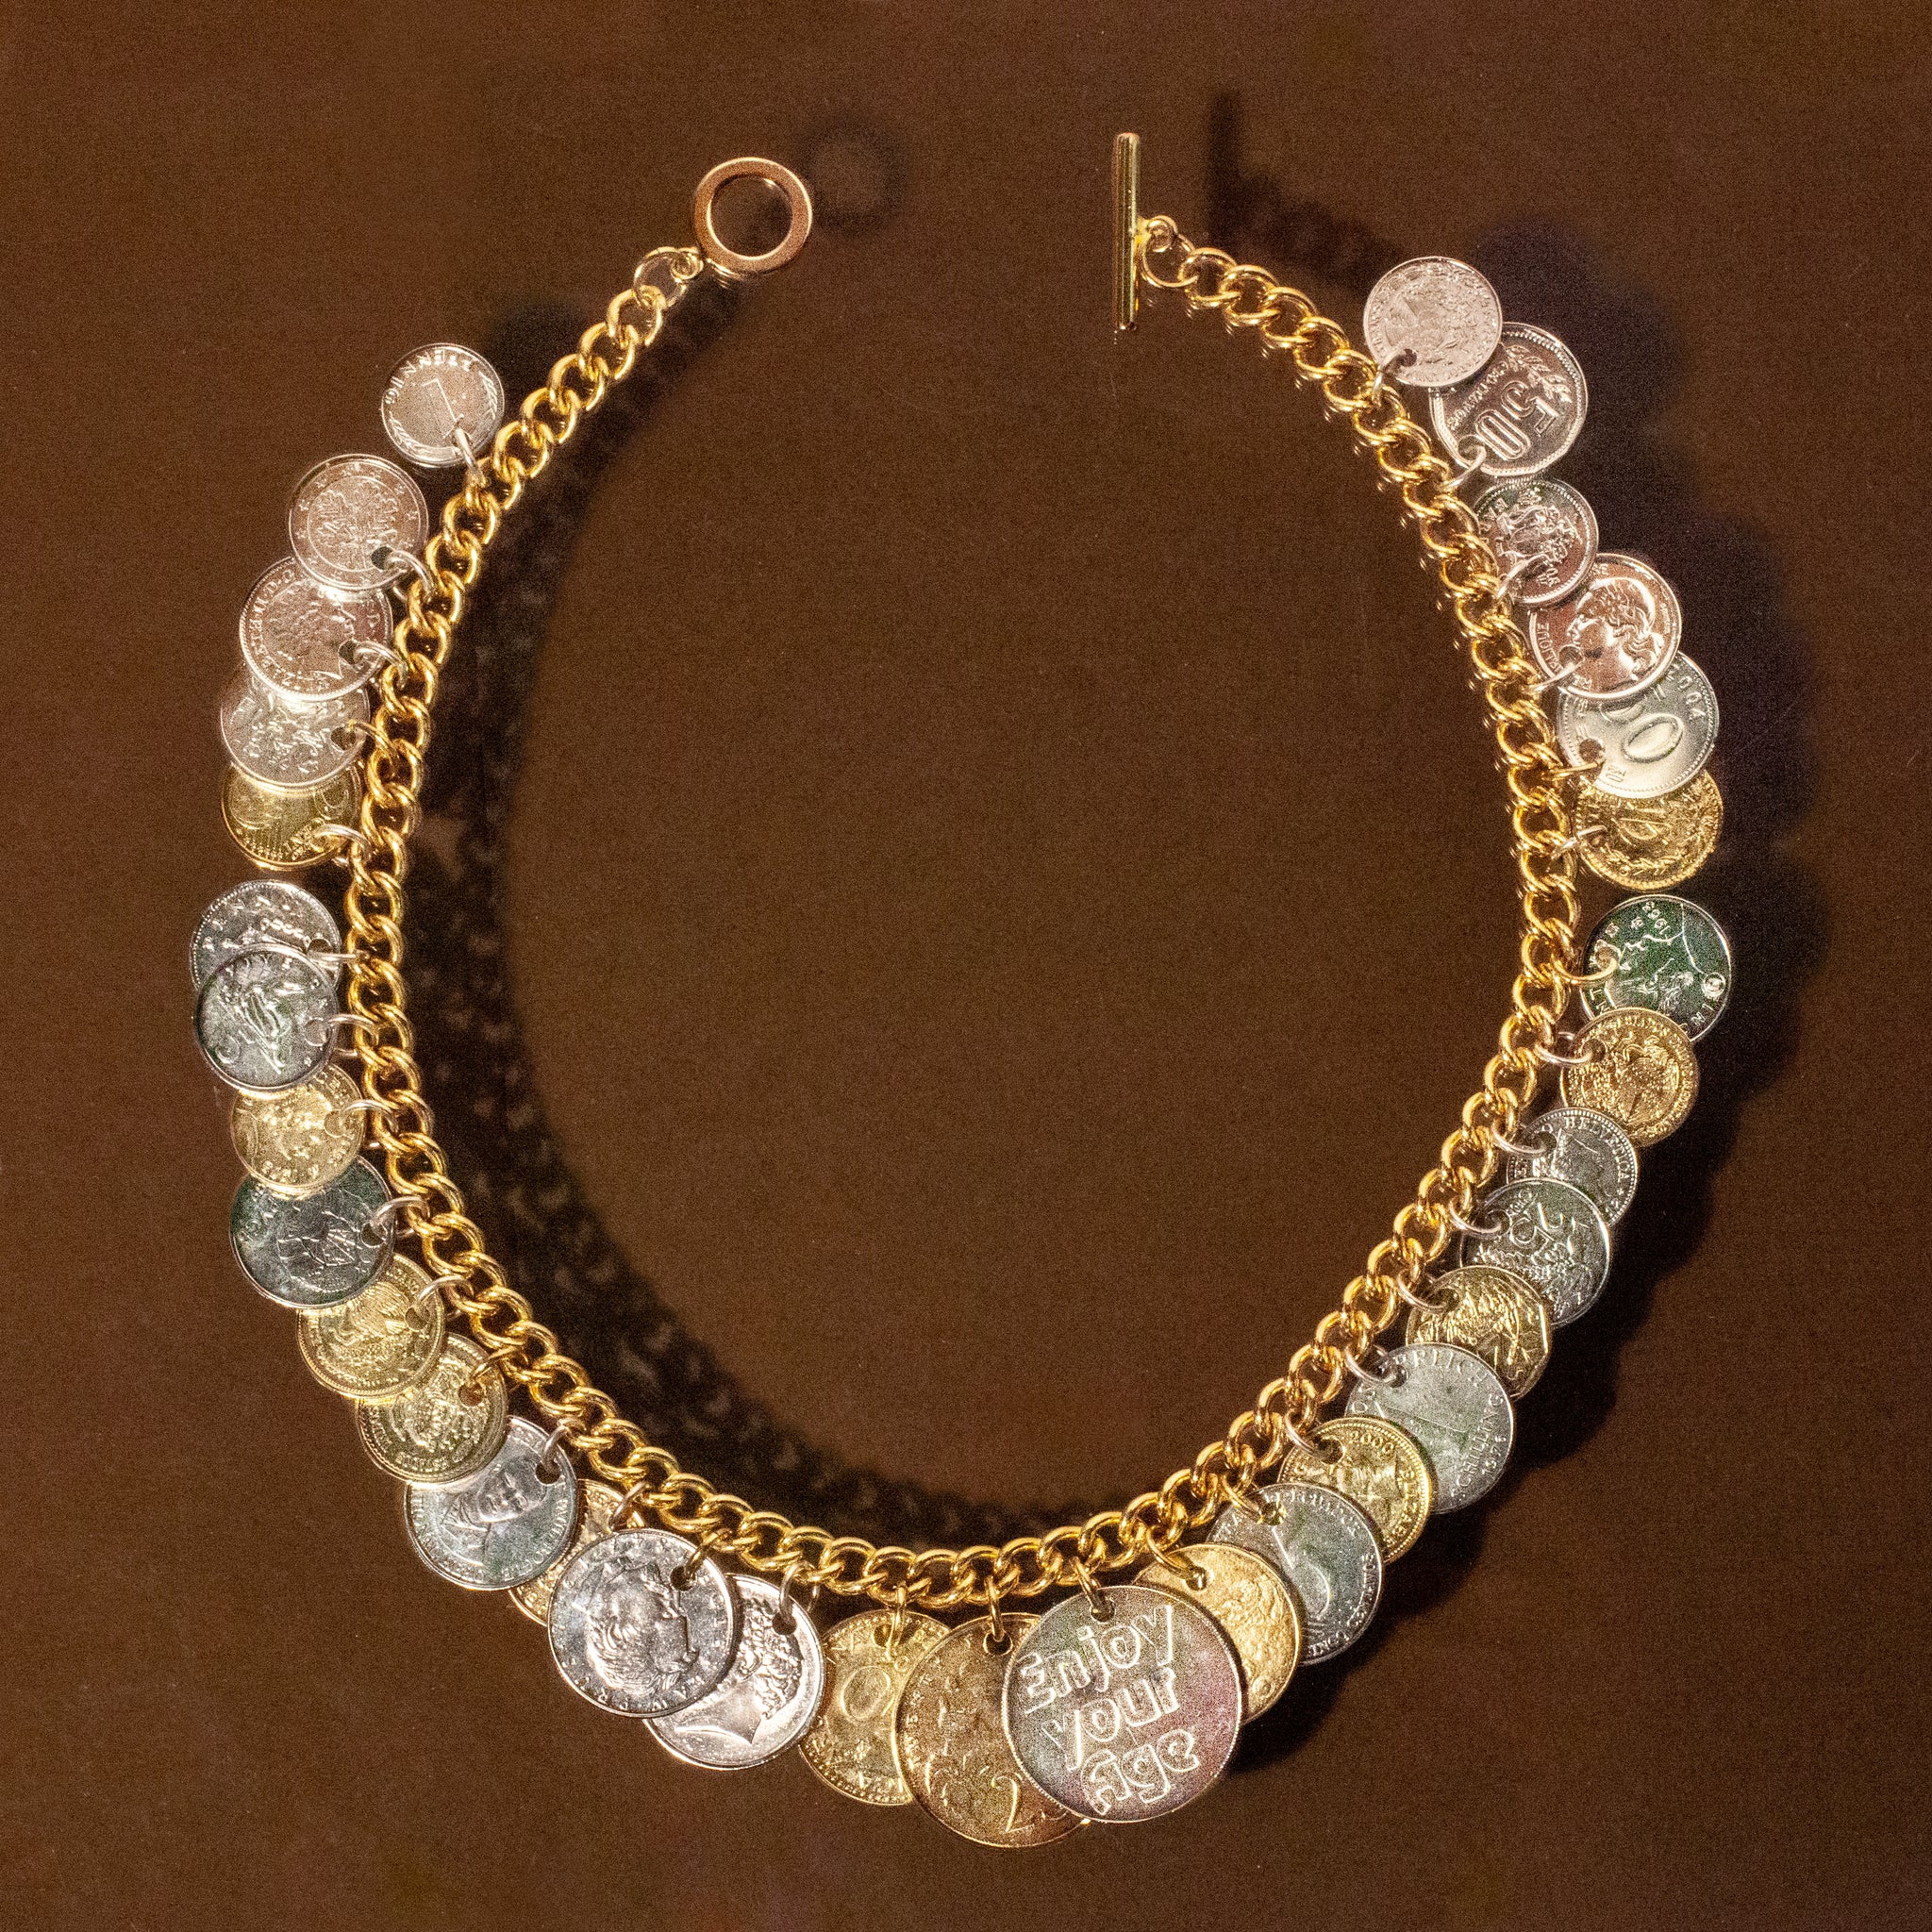 Mixed Coin Necklace